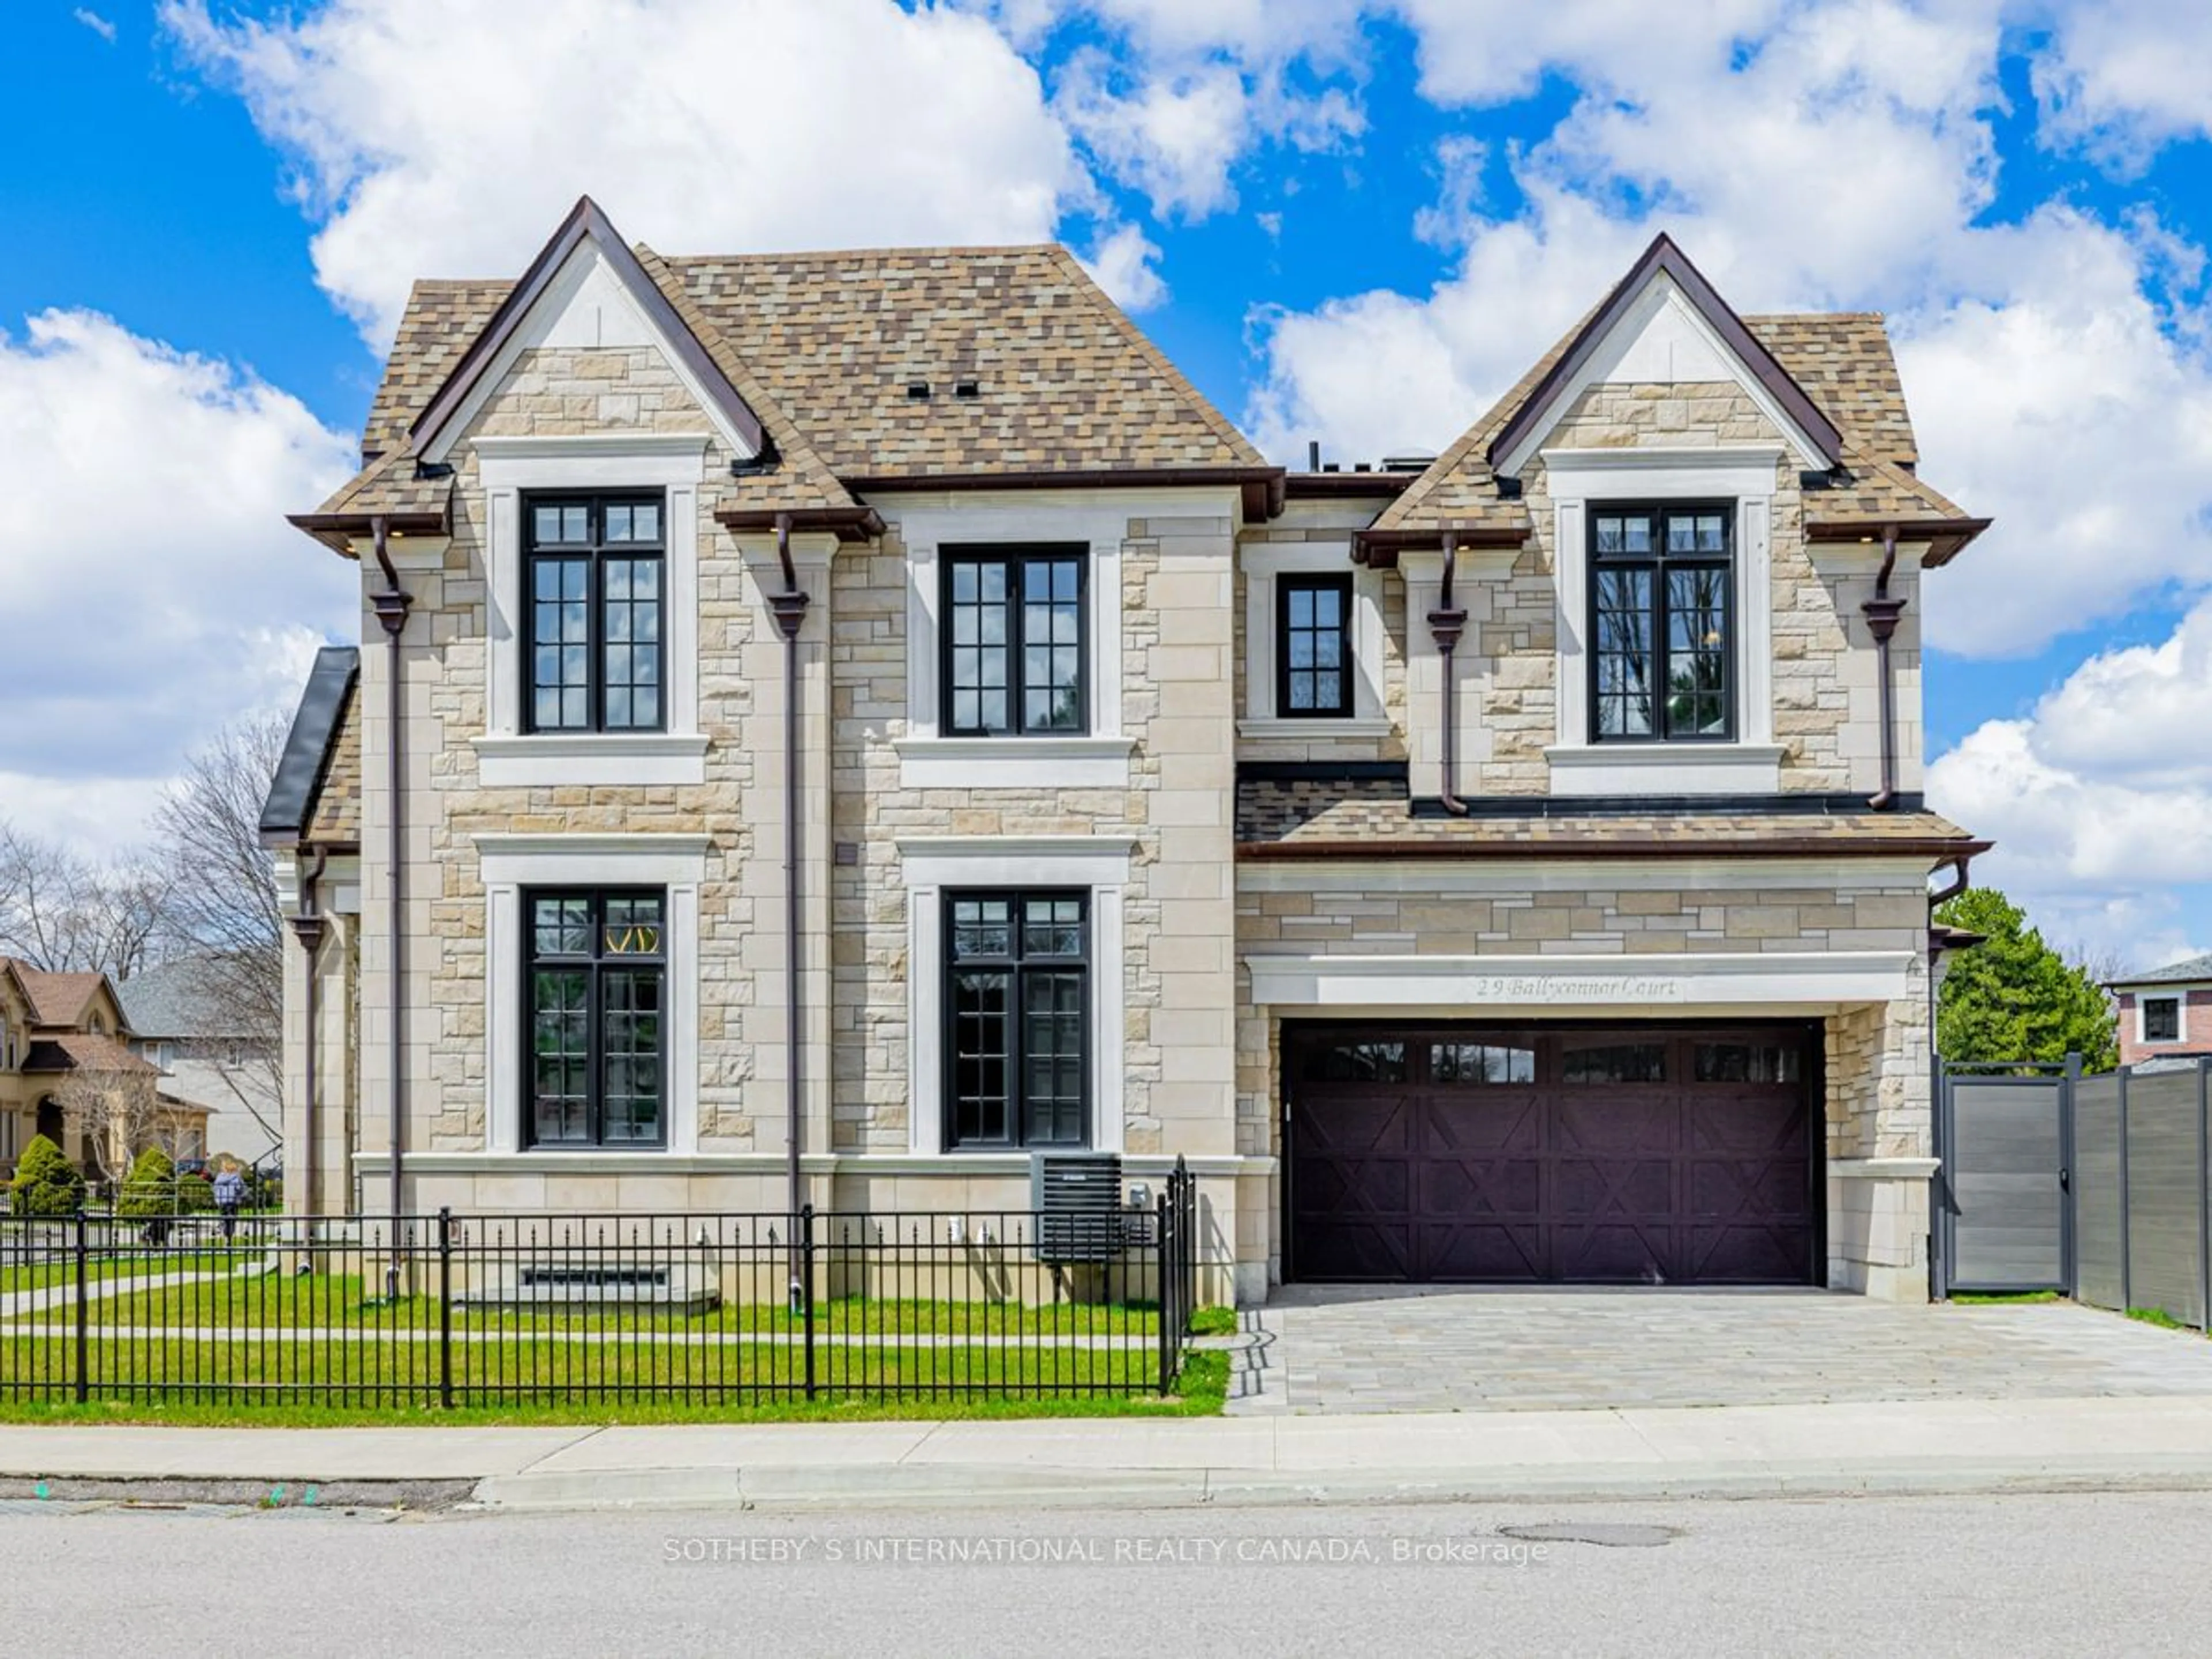 Home with brick exterior material for 29 Ballyconnor Crt, Toronto Ontario M2M 4C6